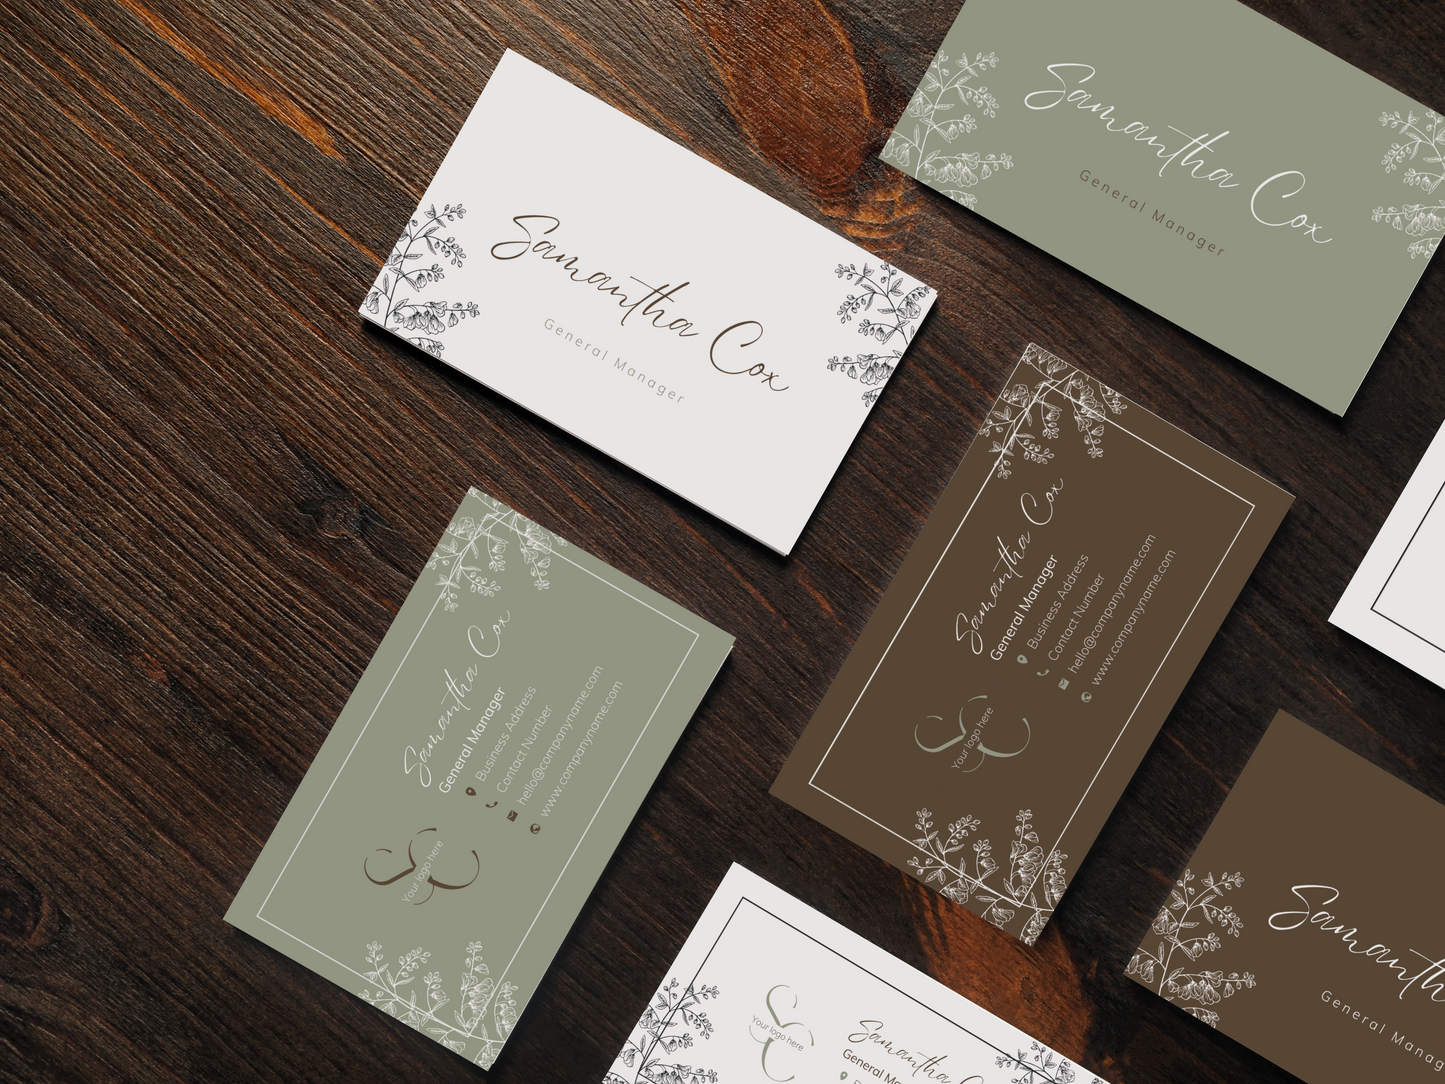 Templates: Printable and Editable Minimal Floral Business Card